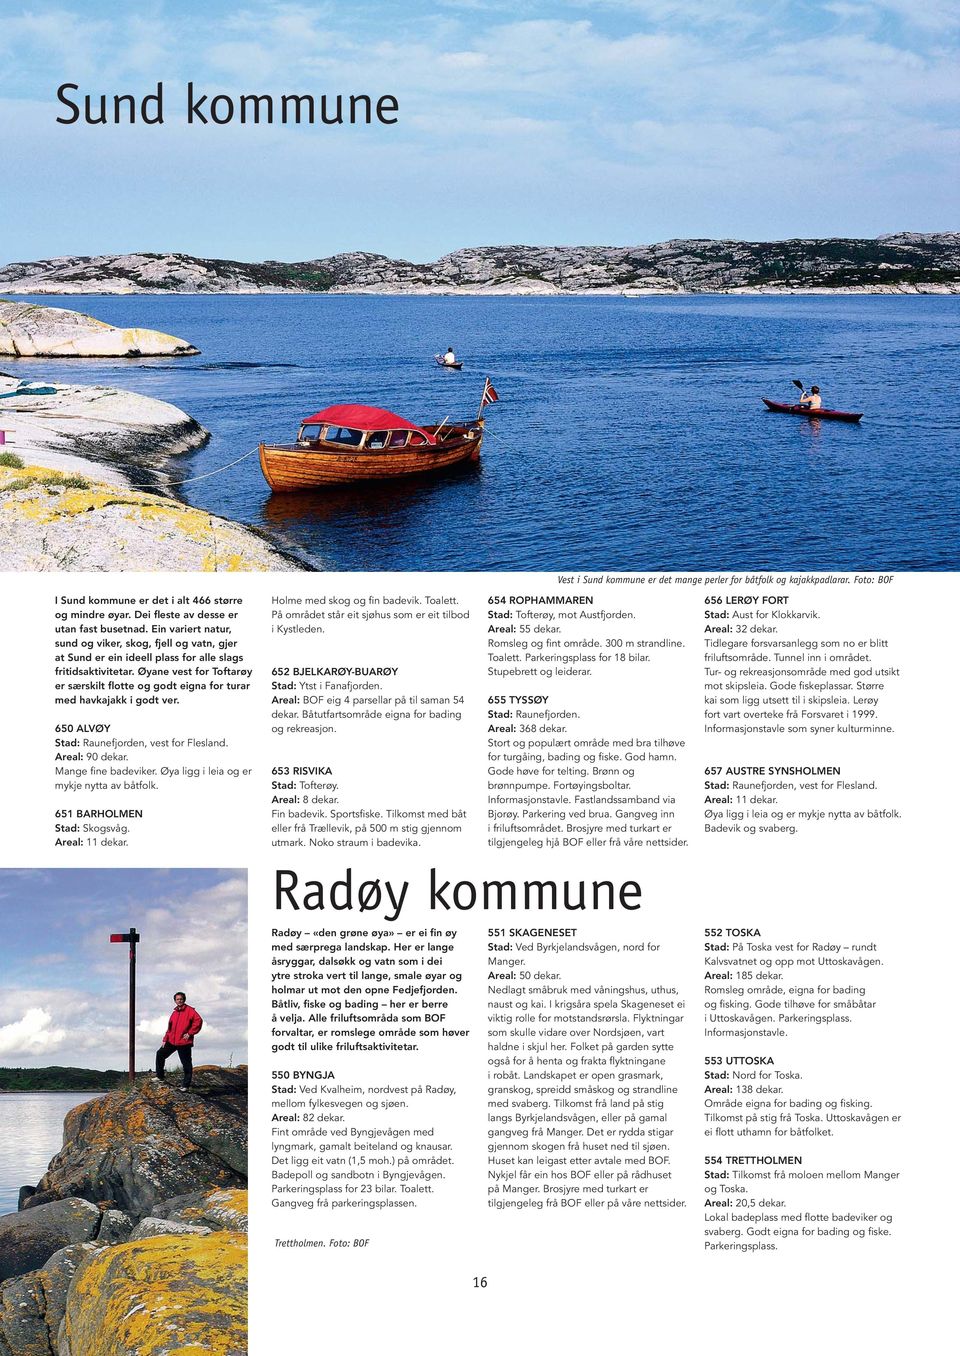 Øyane vest for Toftarøy er særskilt flotte og godt eigna for turar med havkajakk i godt ver. 650 ALVØY Stad: Raunefjorden, vest for Flesland. Areal: 90 dekar. Mange fine badeviker.